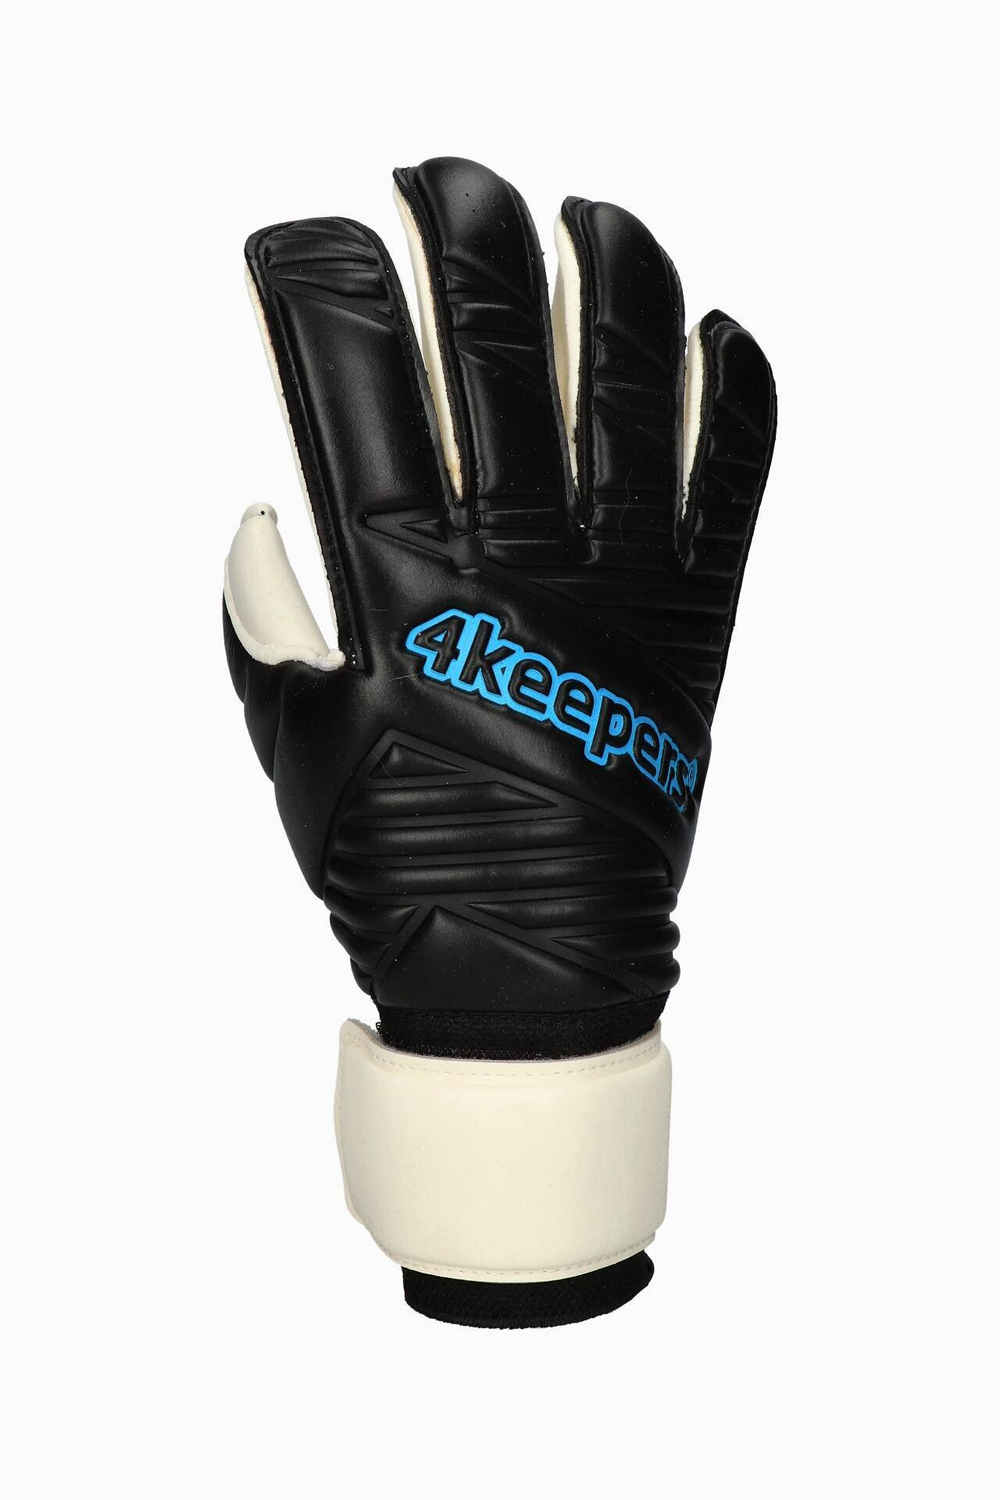 Вратарские перчатки 4keepers Retro IV RF